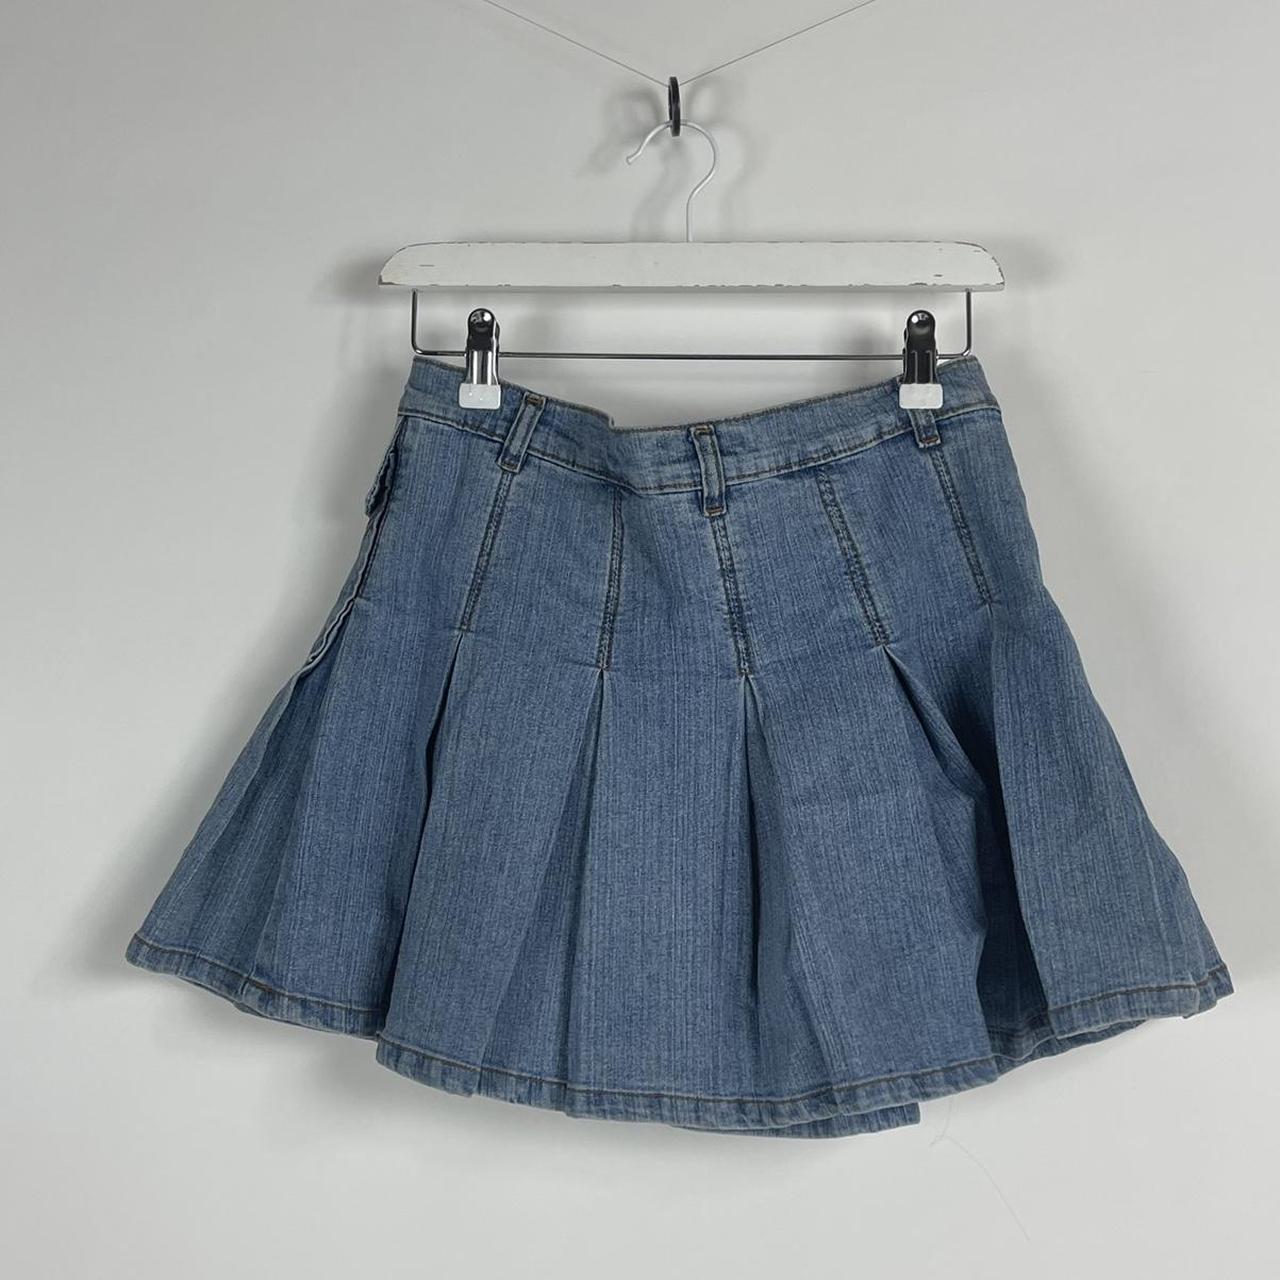 Vintage Pleated Denim Mini Skirt Lovely Stretchy Depop 